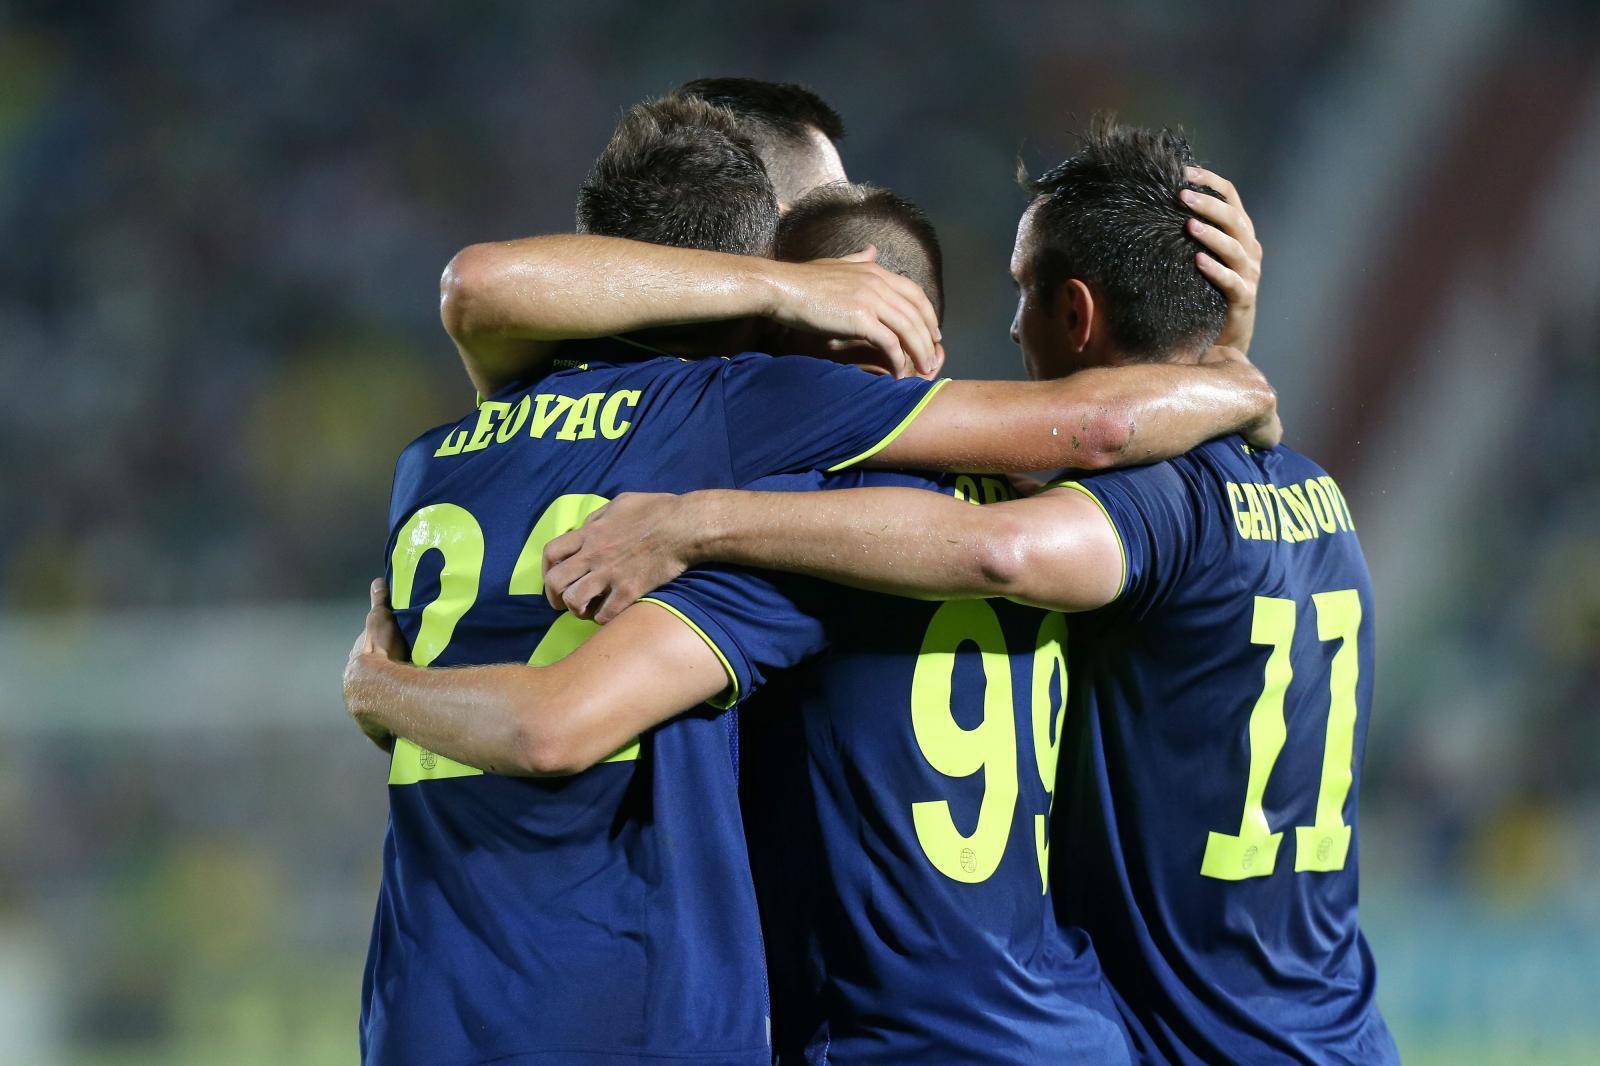 Tbilisi: Prva utakmica 2. pretkola kvalifikacija UEFA Lige prvaka, FC Saburtalo - GNK Dinamo